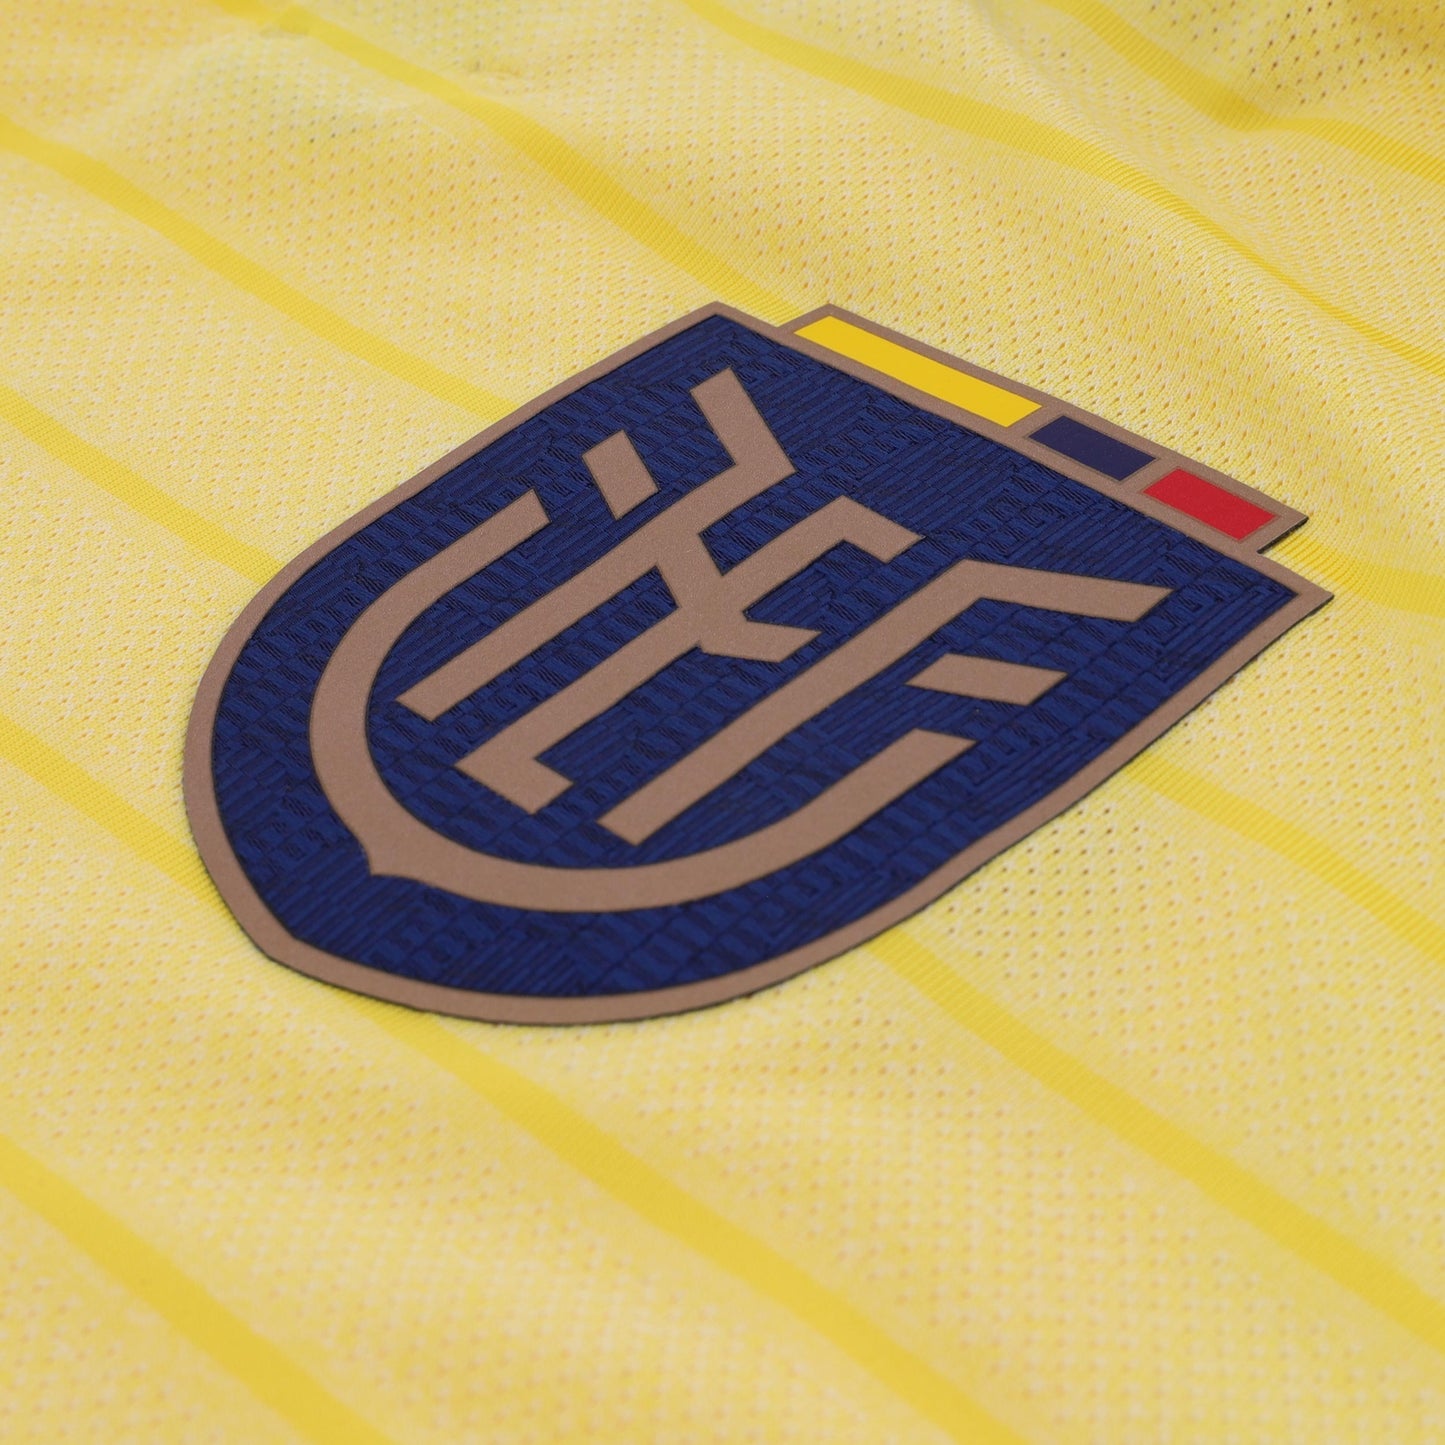 Camiseta Oficial Seleccion de Futbol Ecuador Eliminatorias Ninos